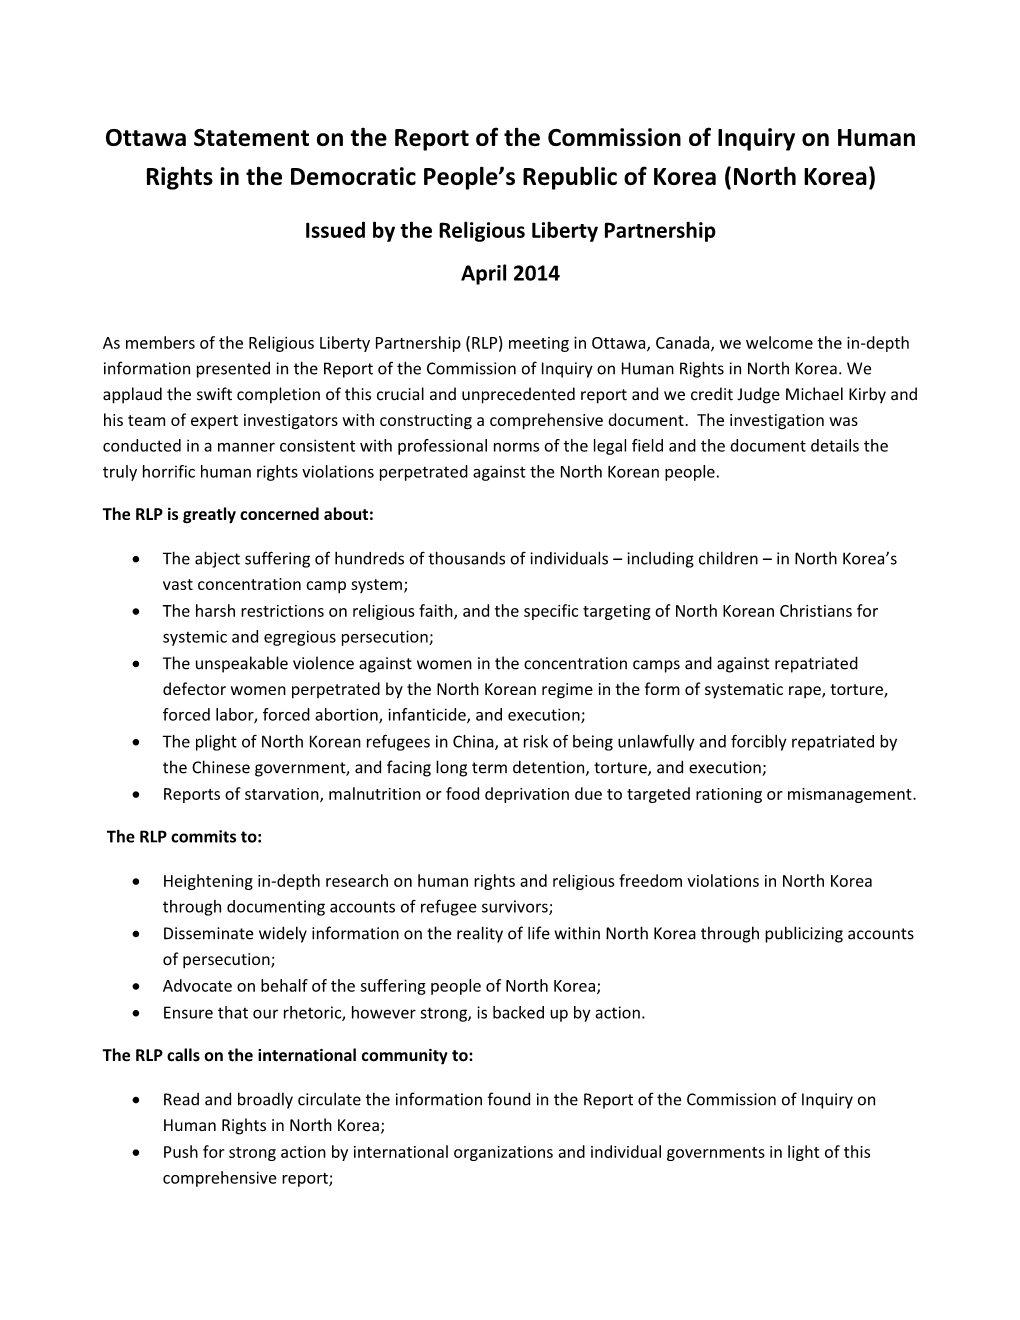 RLP Statement on North Korea